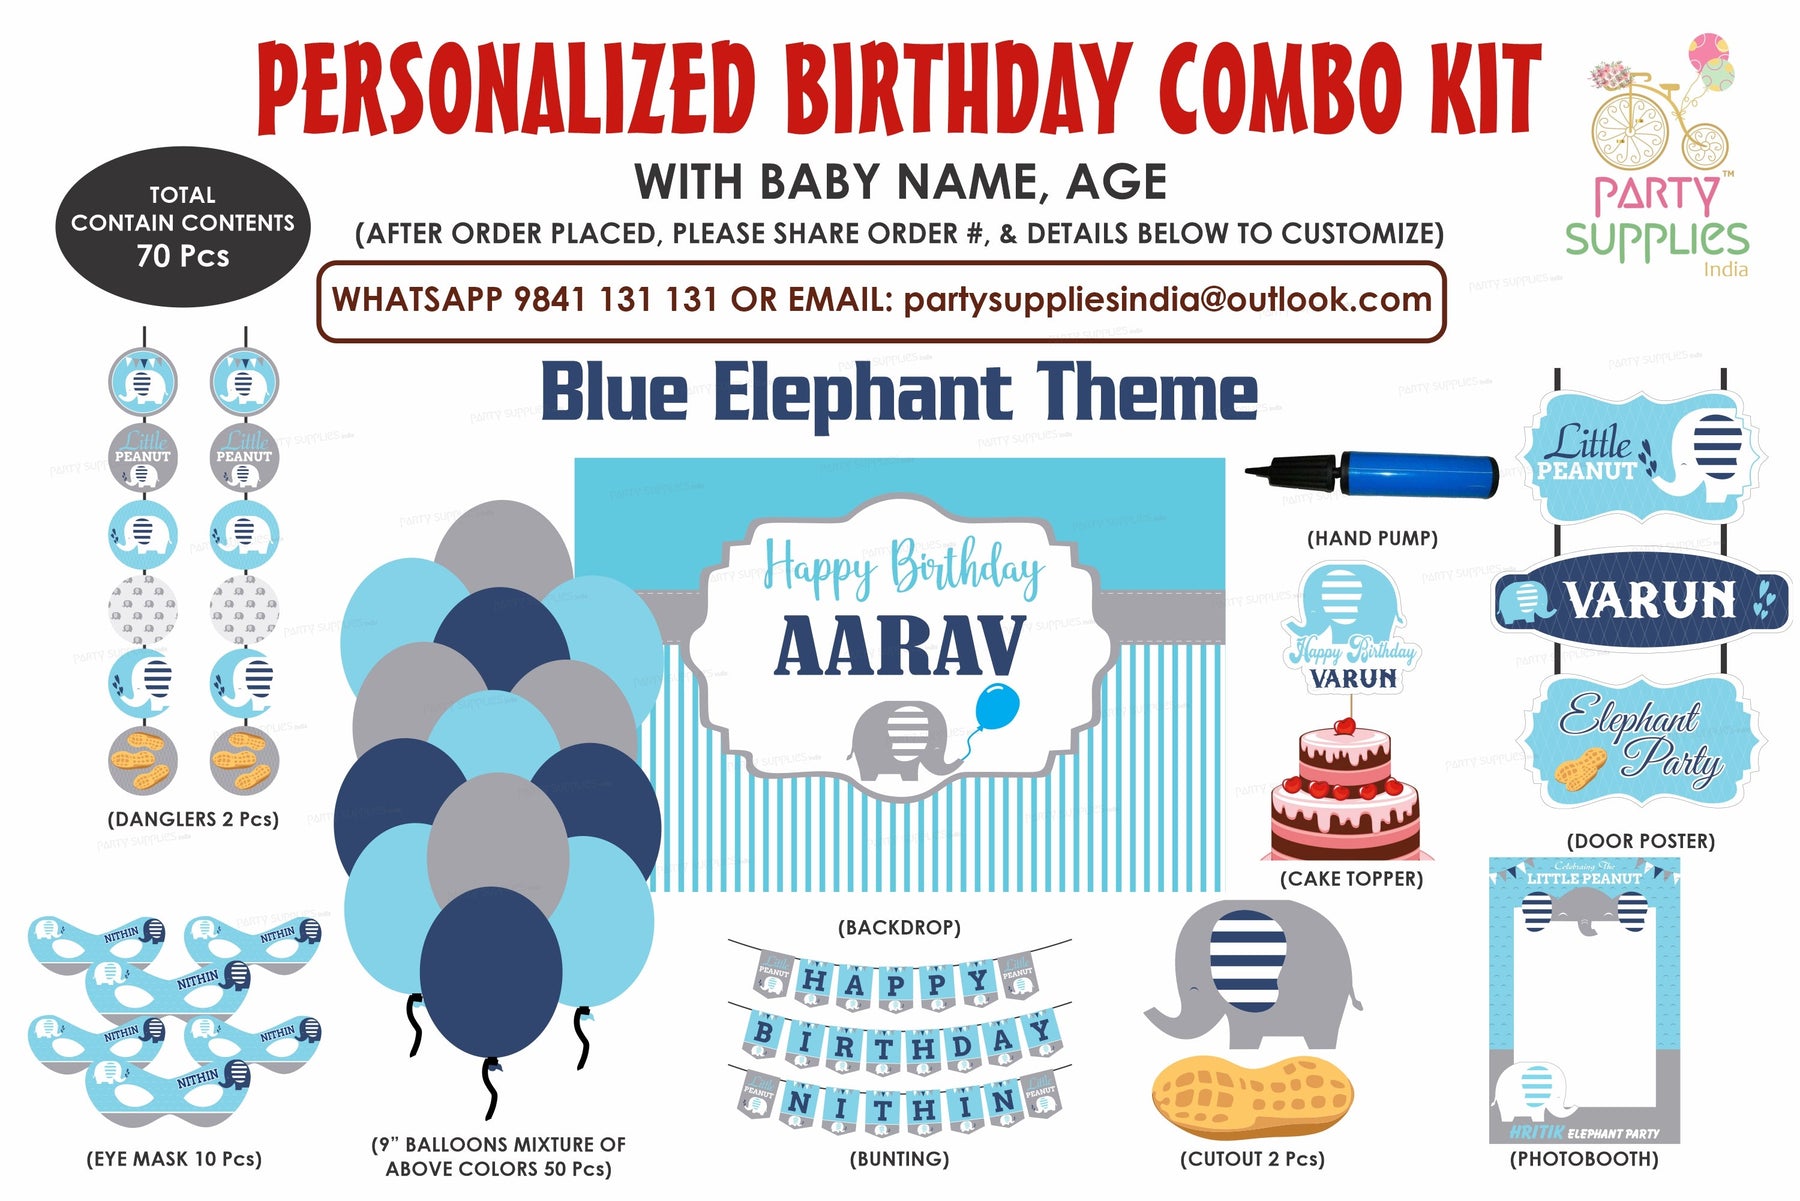 PSI Blue Elephant Theme Exclusive Kit